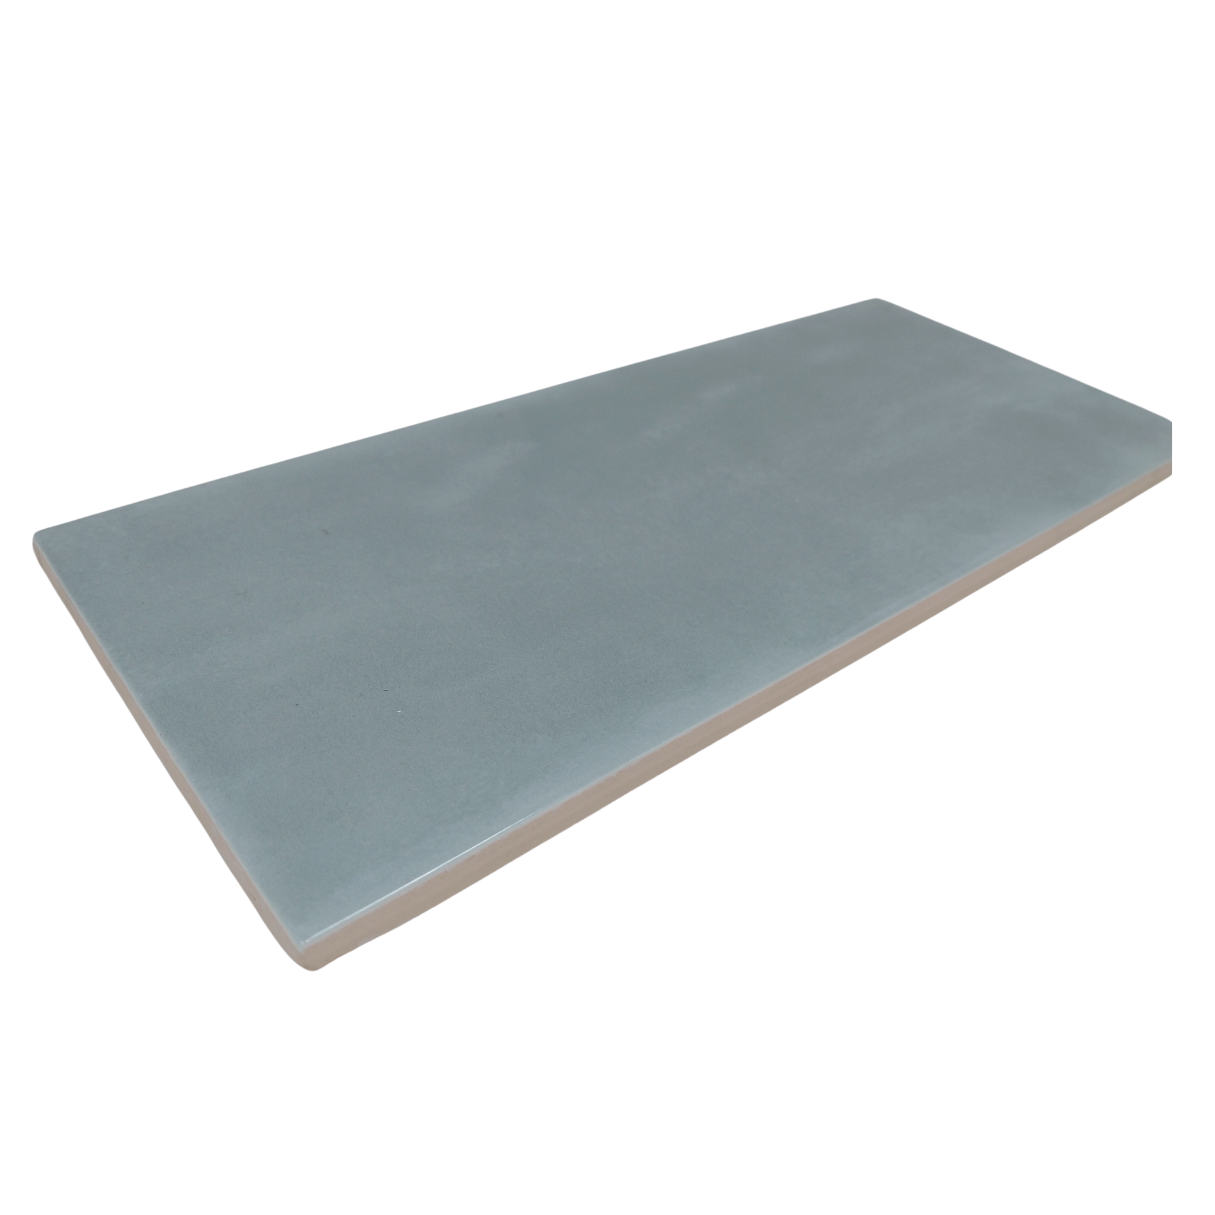 TRCD-MLC-4X10 Santorini Blue Gray 4 1/4x10 Glossy Ceramic Wall Tile Backsplash for Kitchen, Bathroom, Fireplace, Accent Decor